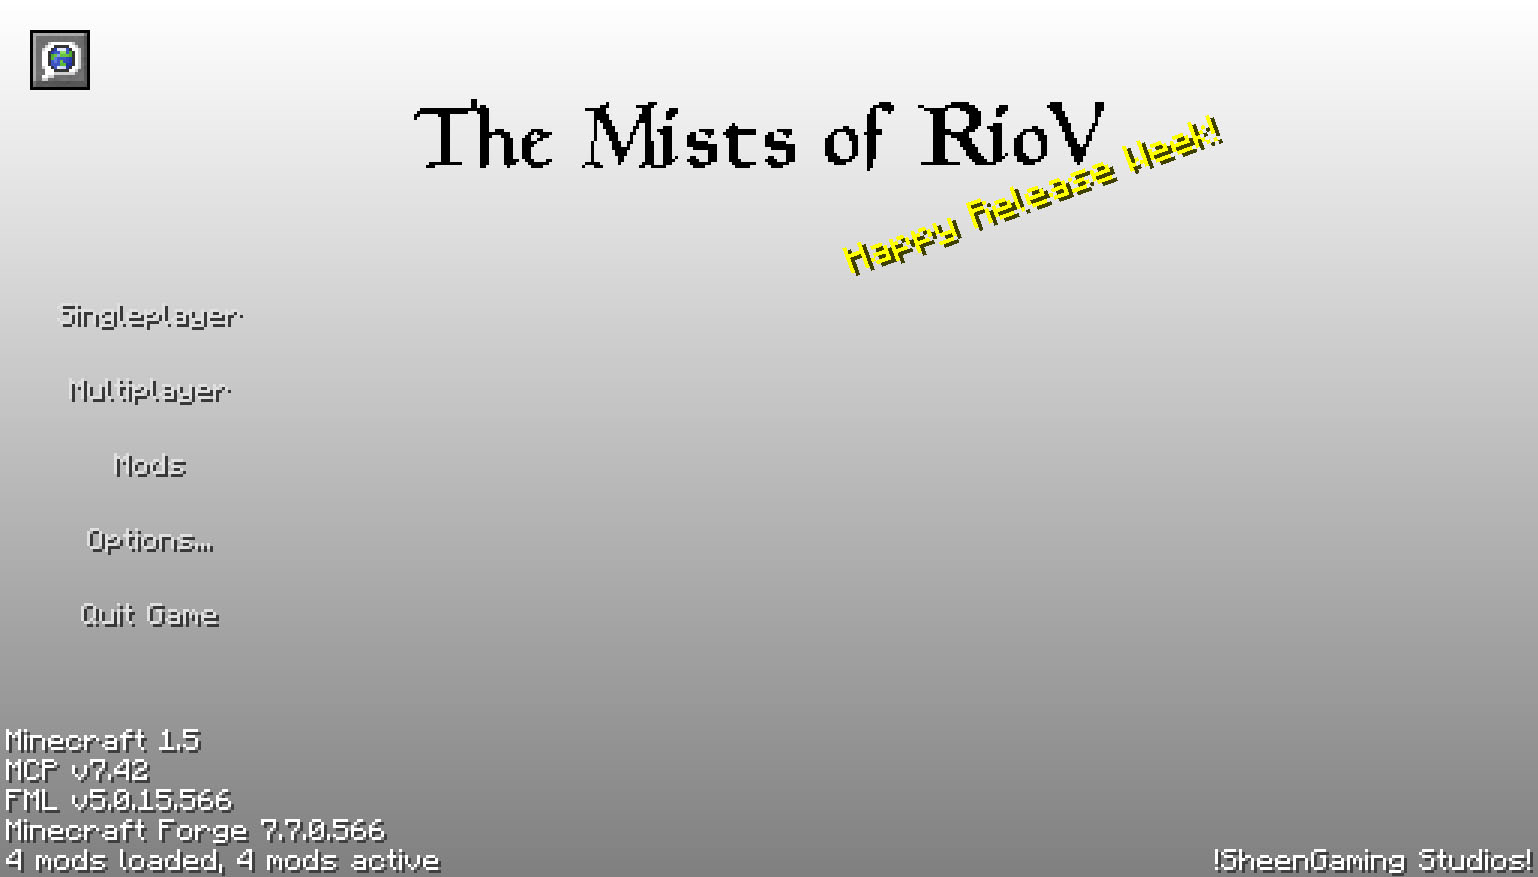 https://planetaminecraft.com/wp-content/uploads/2013/03/efd9f__The-Mists-of-RioV-Mod-5.jpg